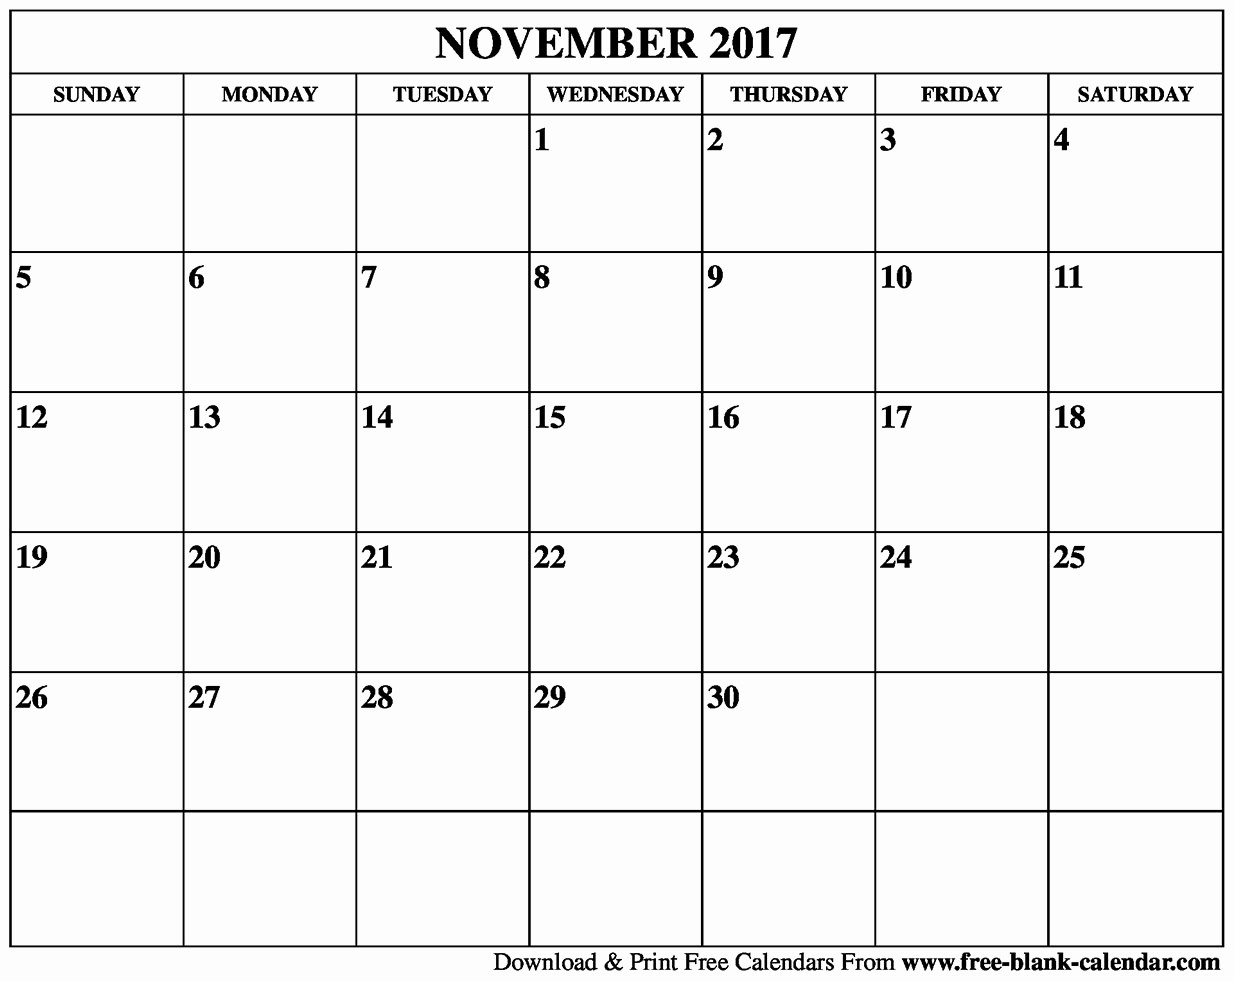 Blank November 2017 Calendar Template Best Of Blank November 2017 Calendar Printable